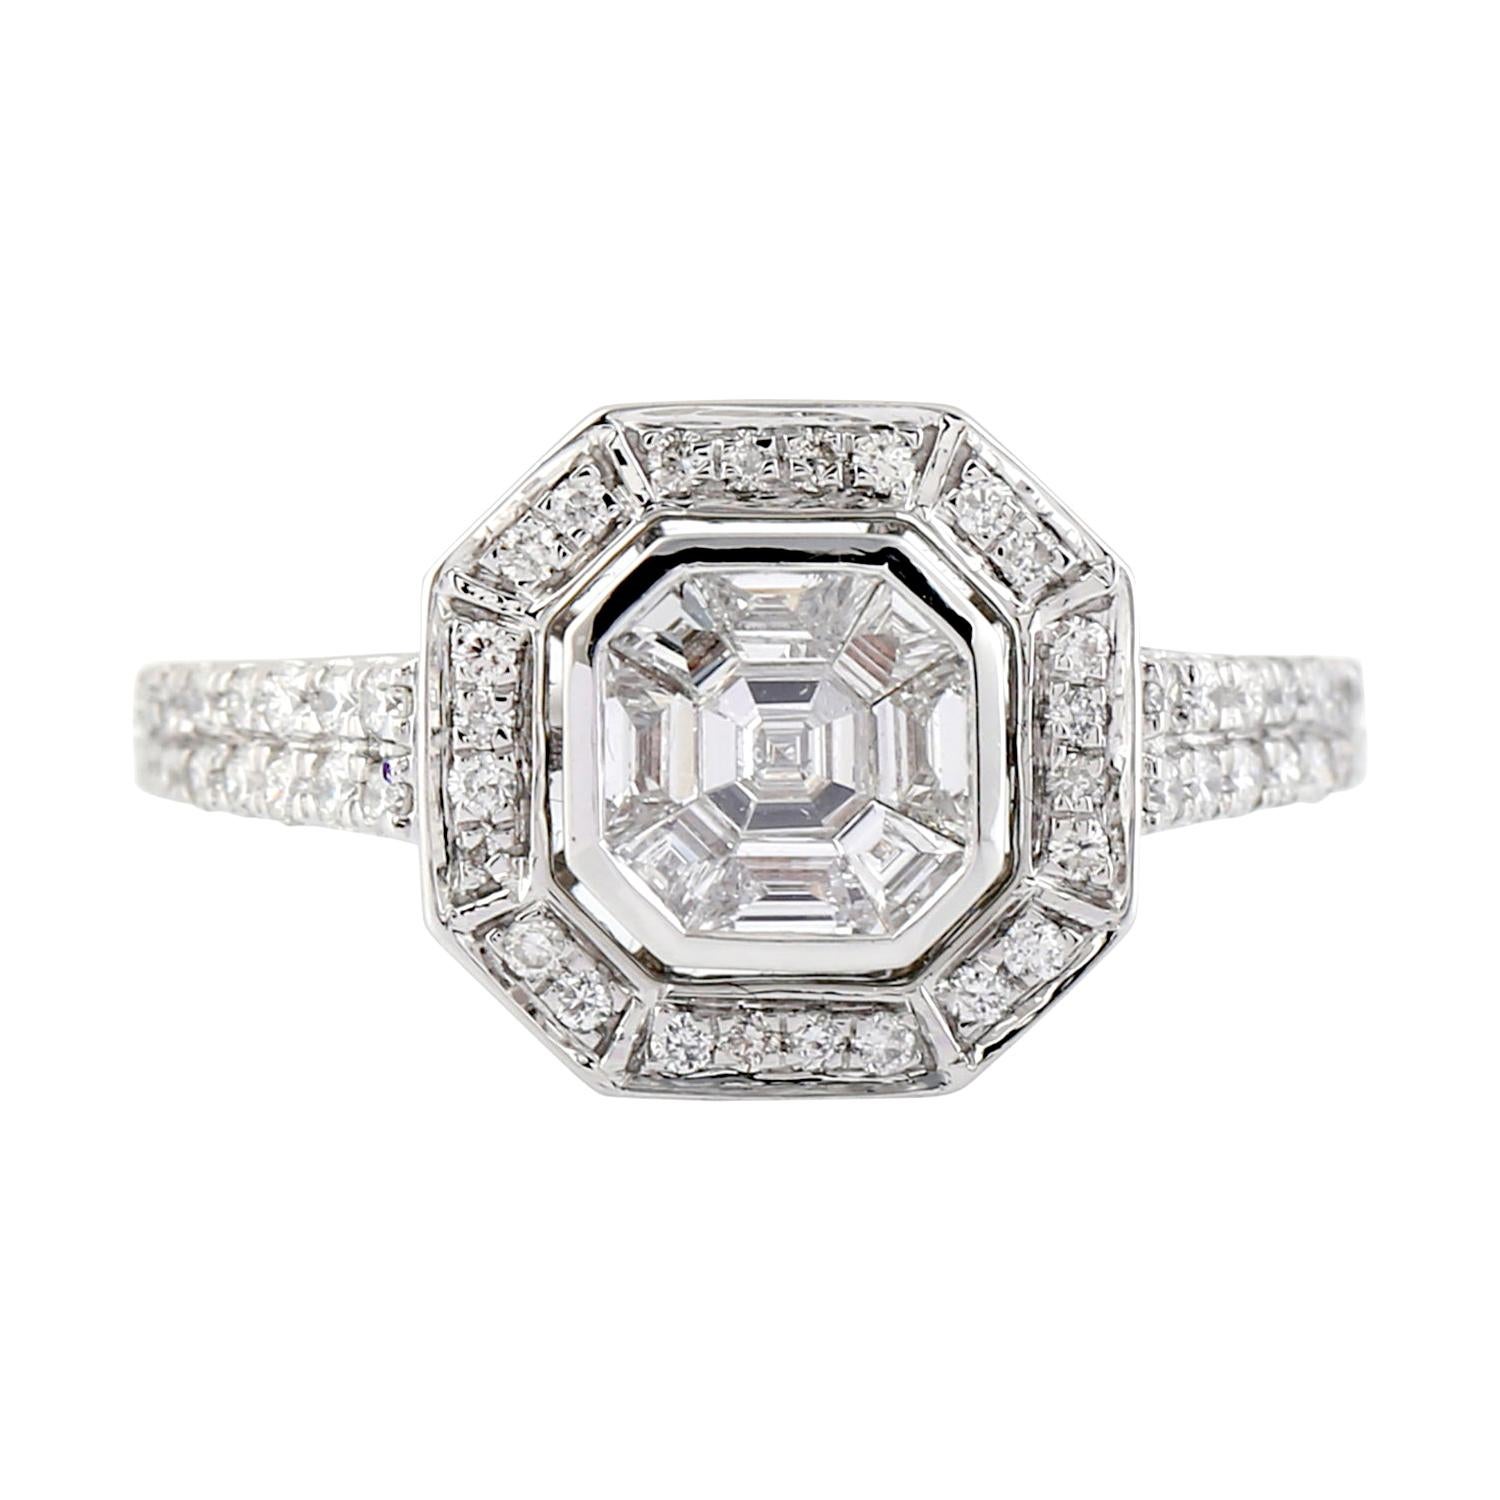 Designer Princess Set Diamond Ring in 18k White Gold